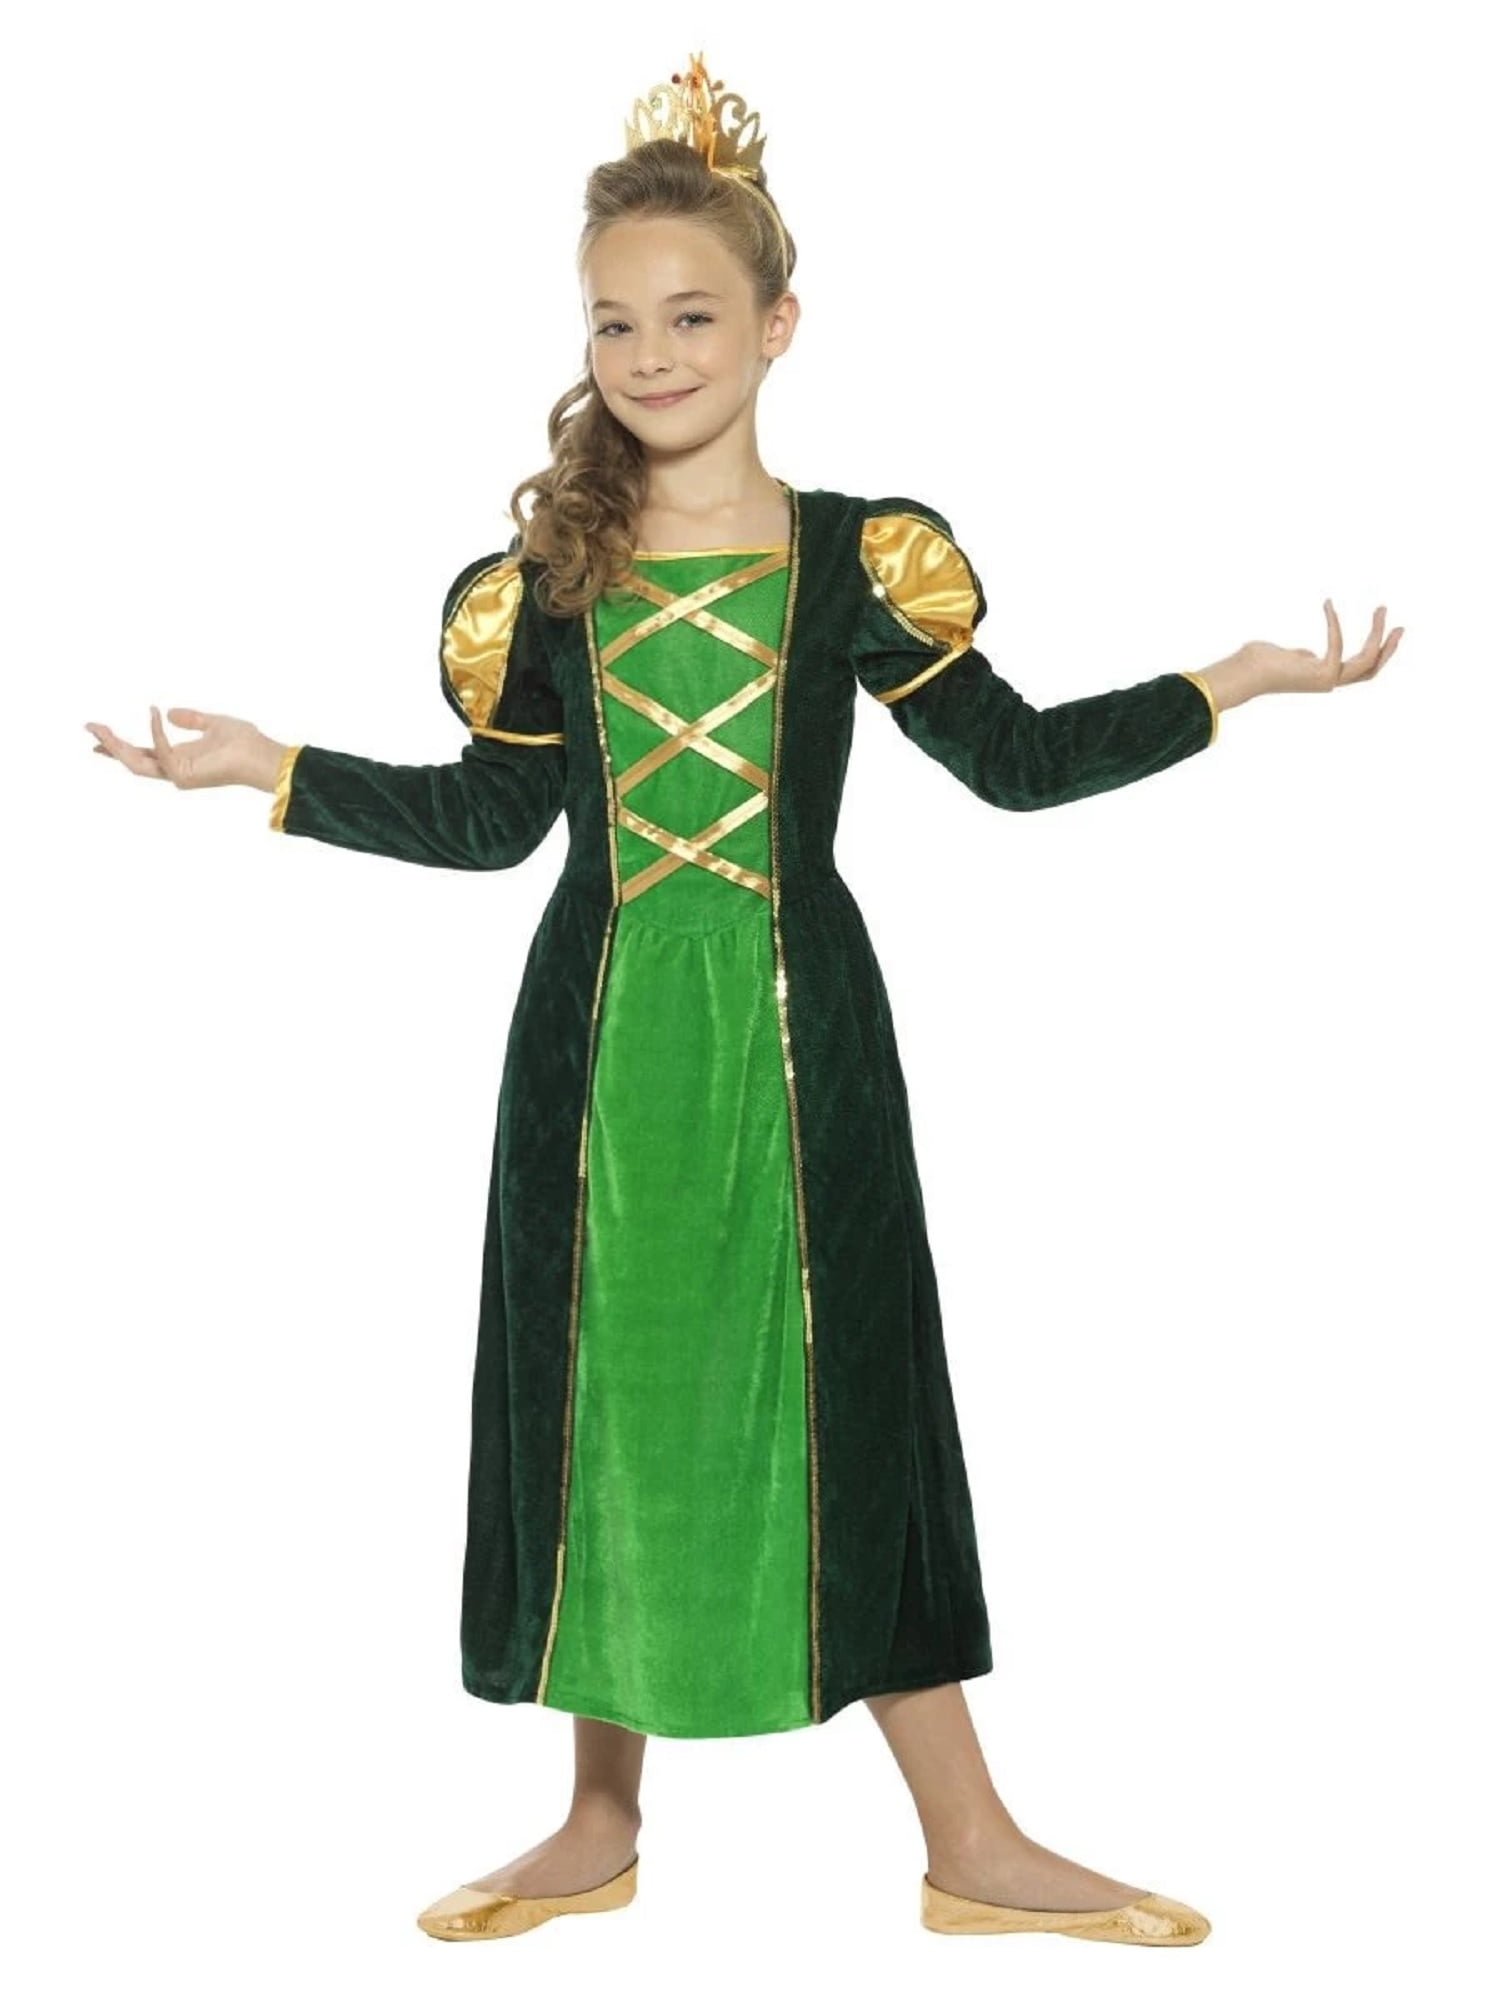 Brand New Blushing Renaissance Medieval Princess Girls Child Costume